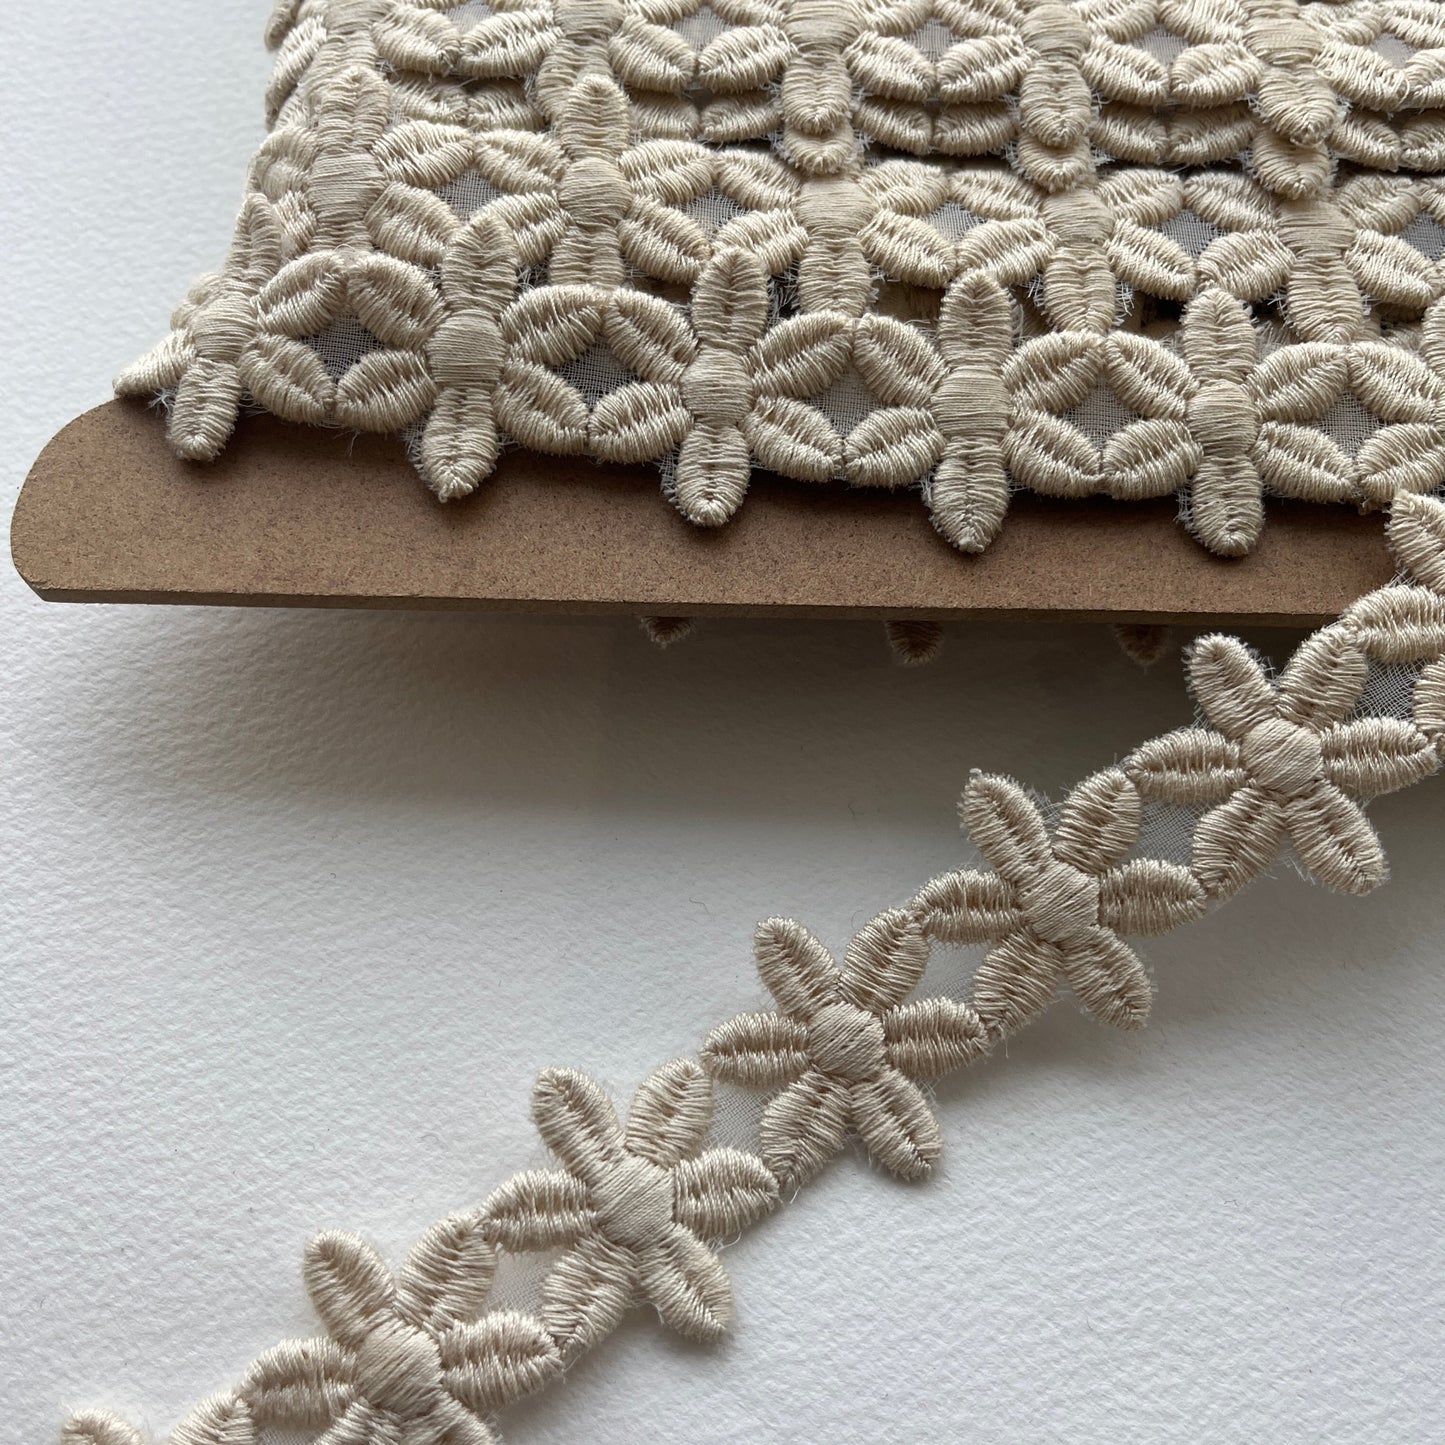 Vintage embroidered daisy chain lace edging trim. designer deadstock haberdashery - Kleins Haberdashery